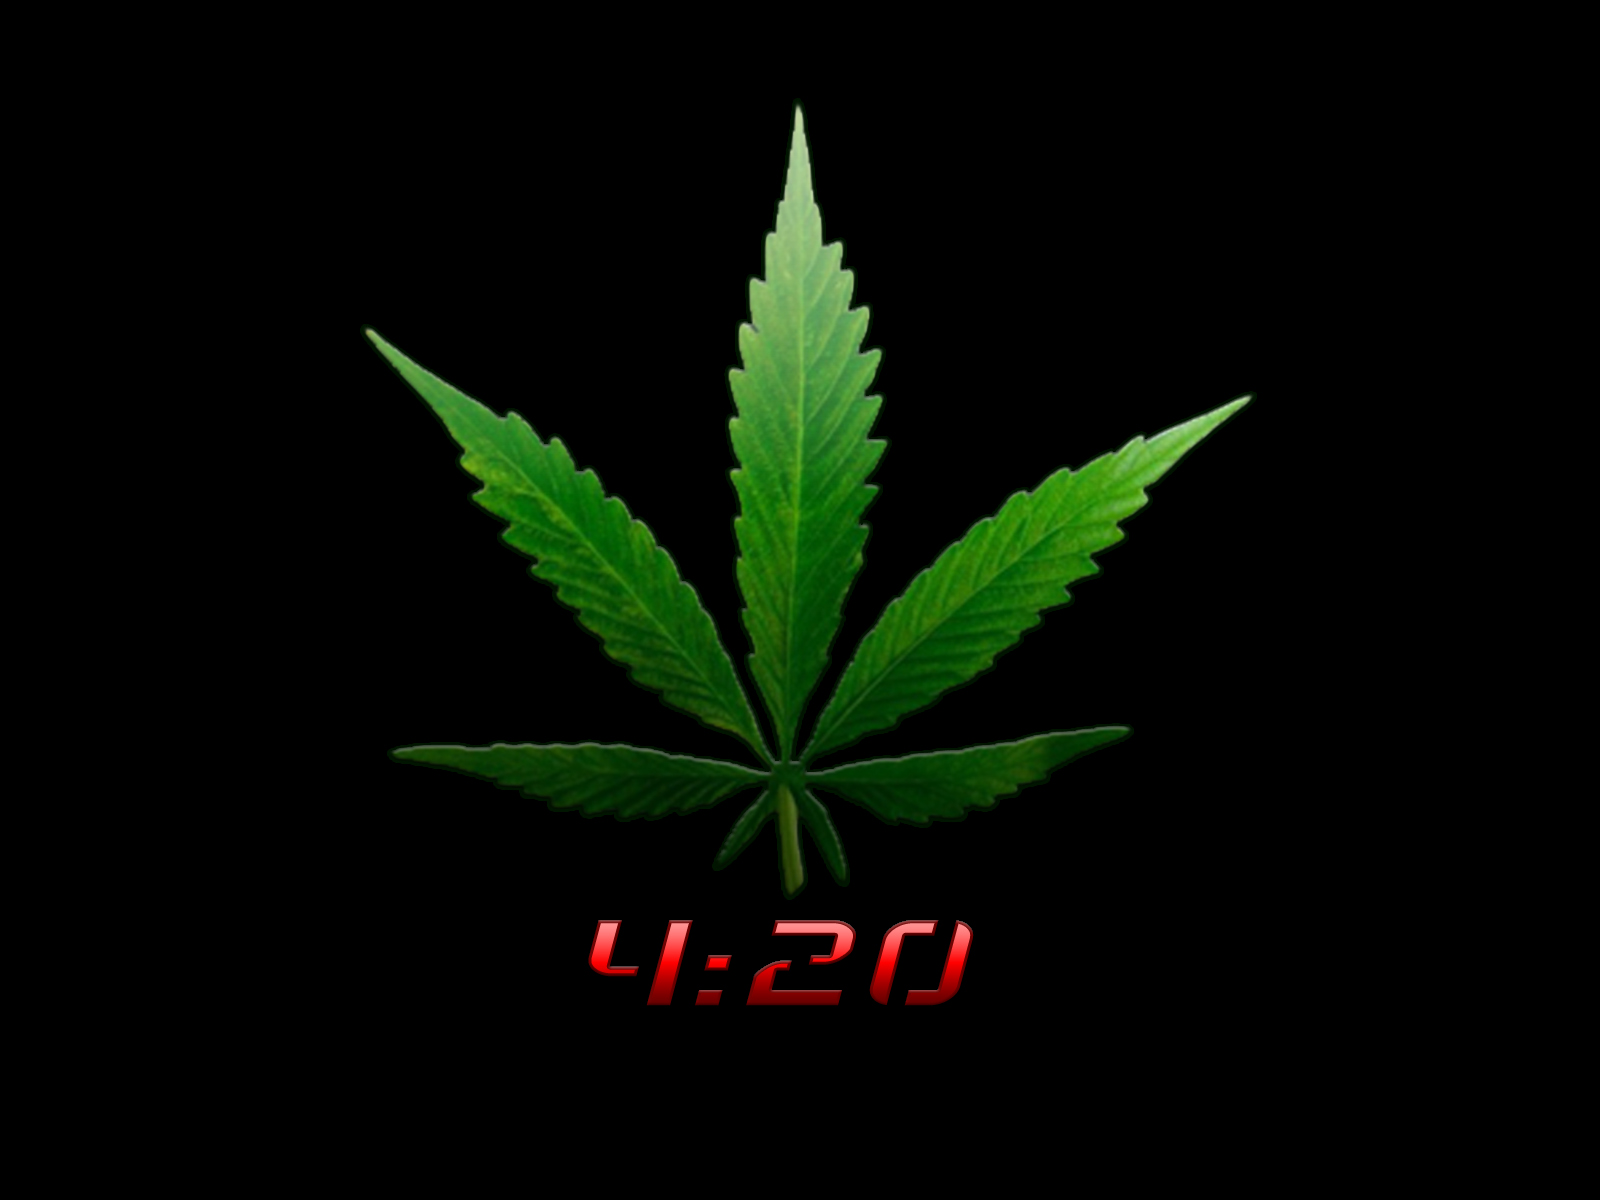 Its 420 O Clock  Cannabis Review Logbook Marijuana Journal To Record  Your Favourite Strain  Gift For SmokersFunny Quote MaryJane  MrSativa 9798657288261 Amazoncom Books